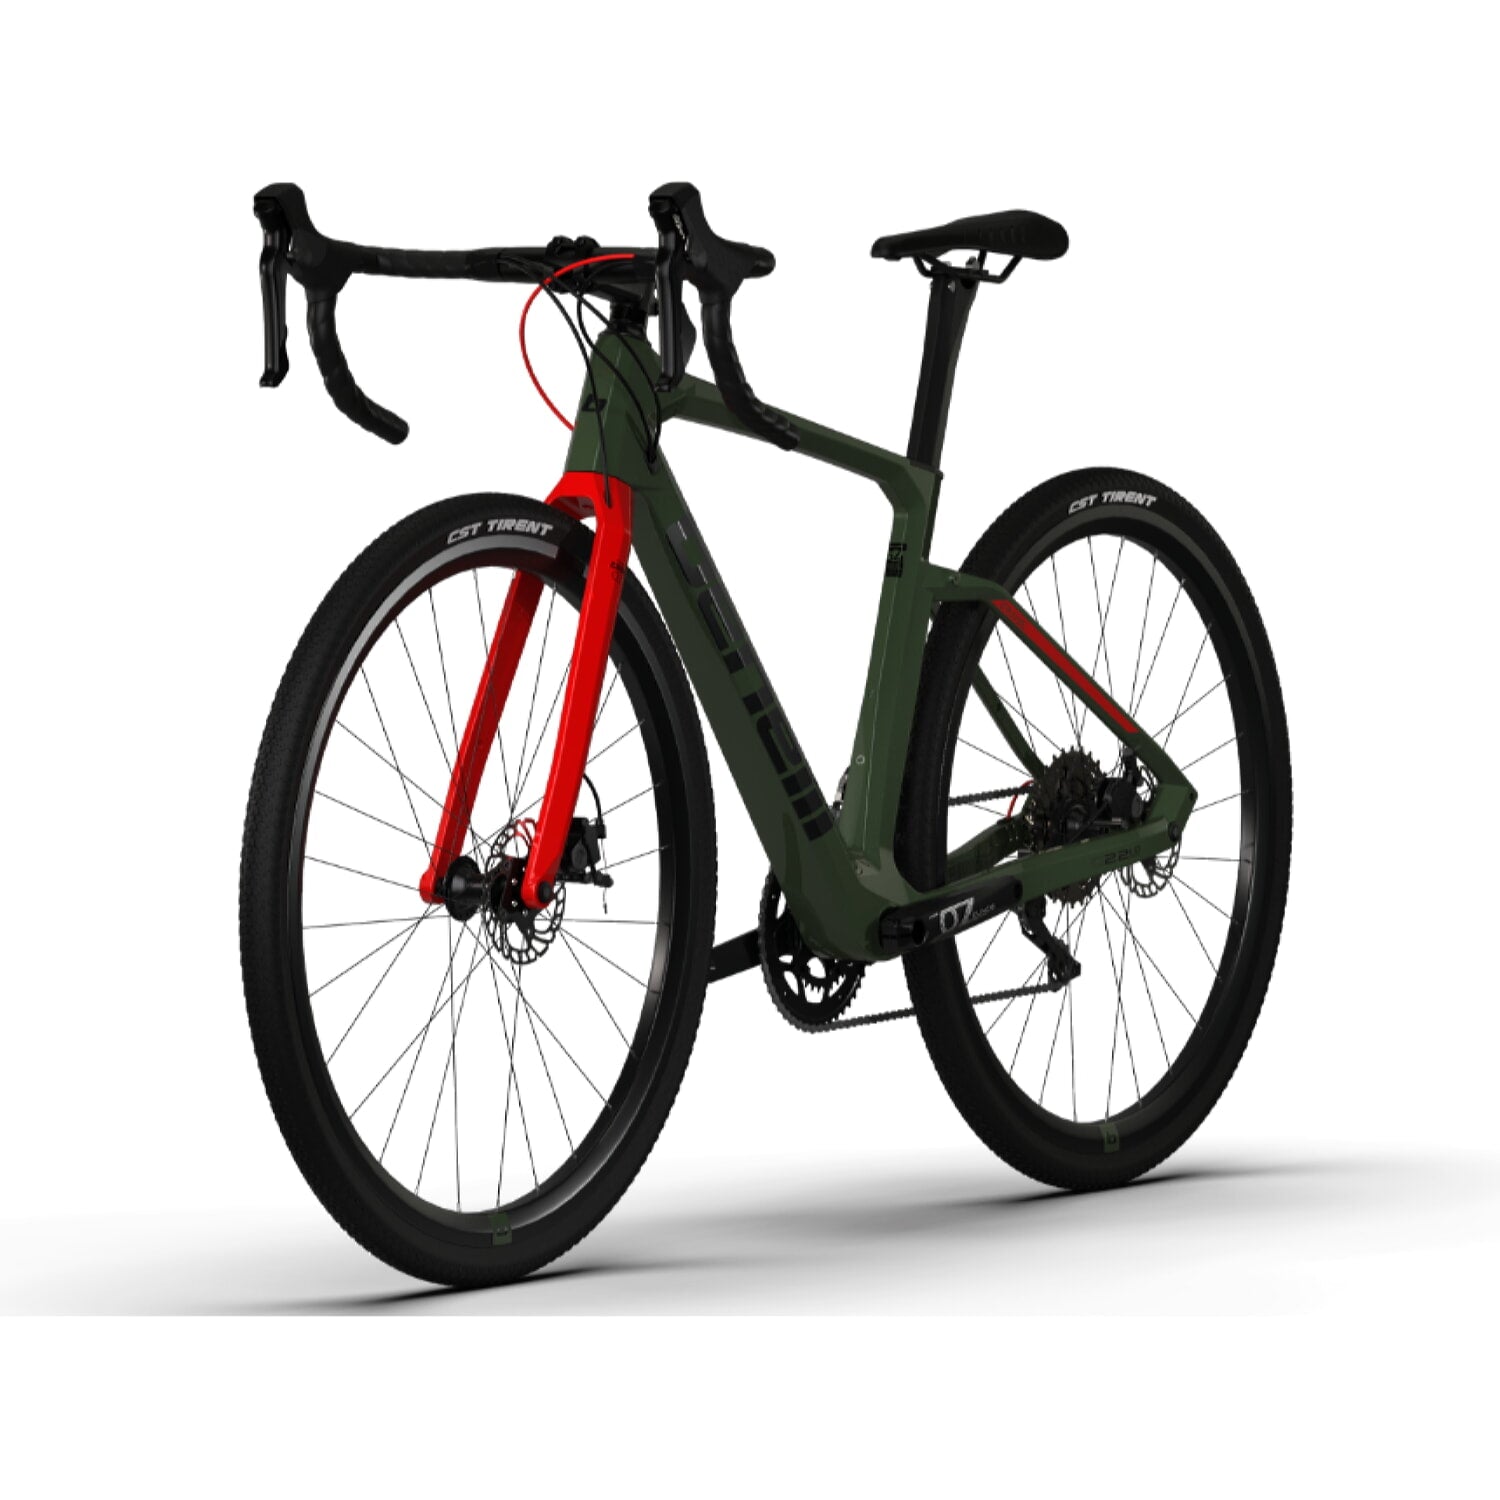 Bicicleta Gravel Benelli Carb. (G22 1.0 Adv Carb) Color Verde Militar/Negro Talla M